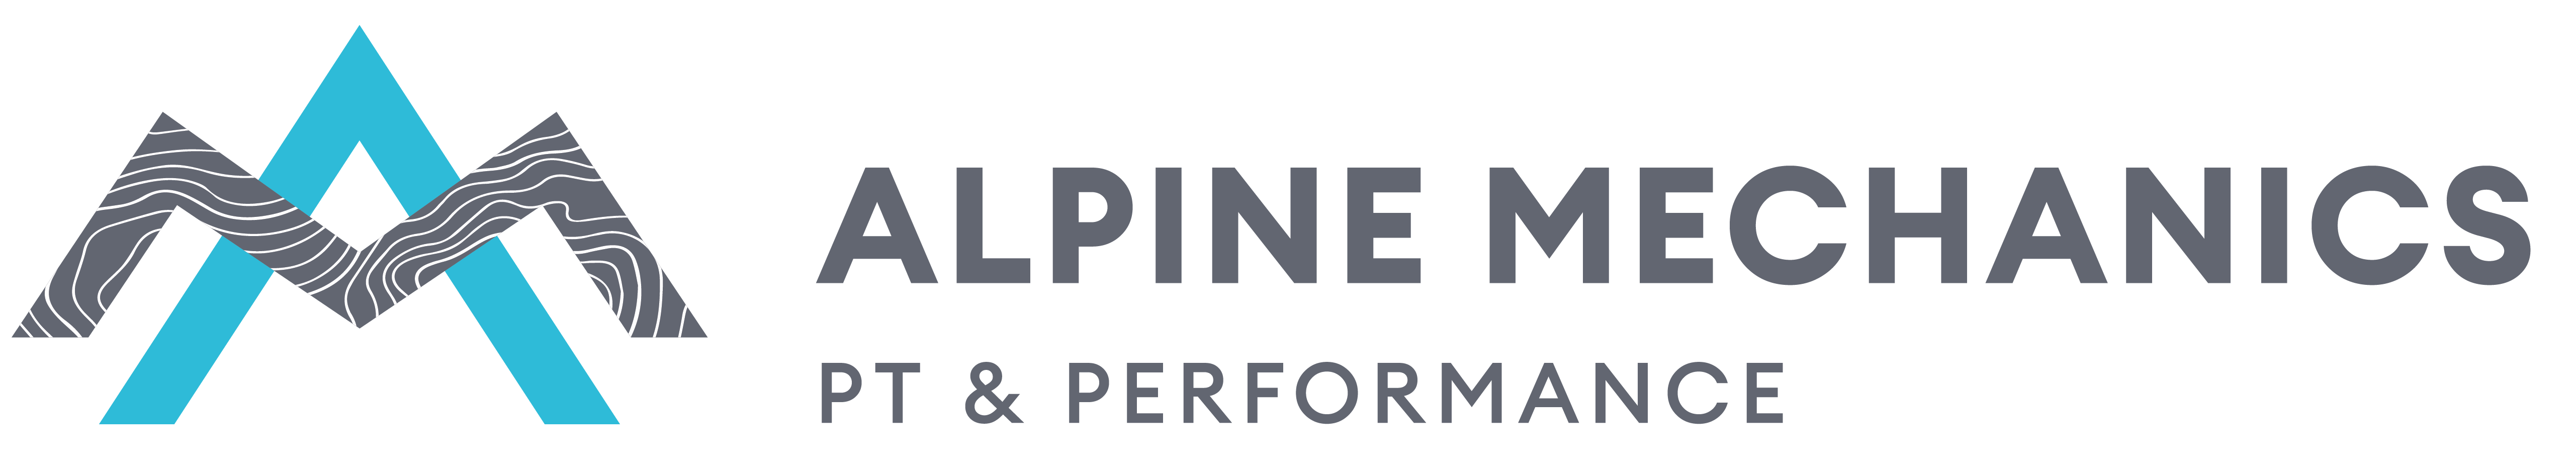 Alpine Mechanics | Physical Therapy